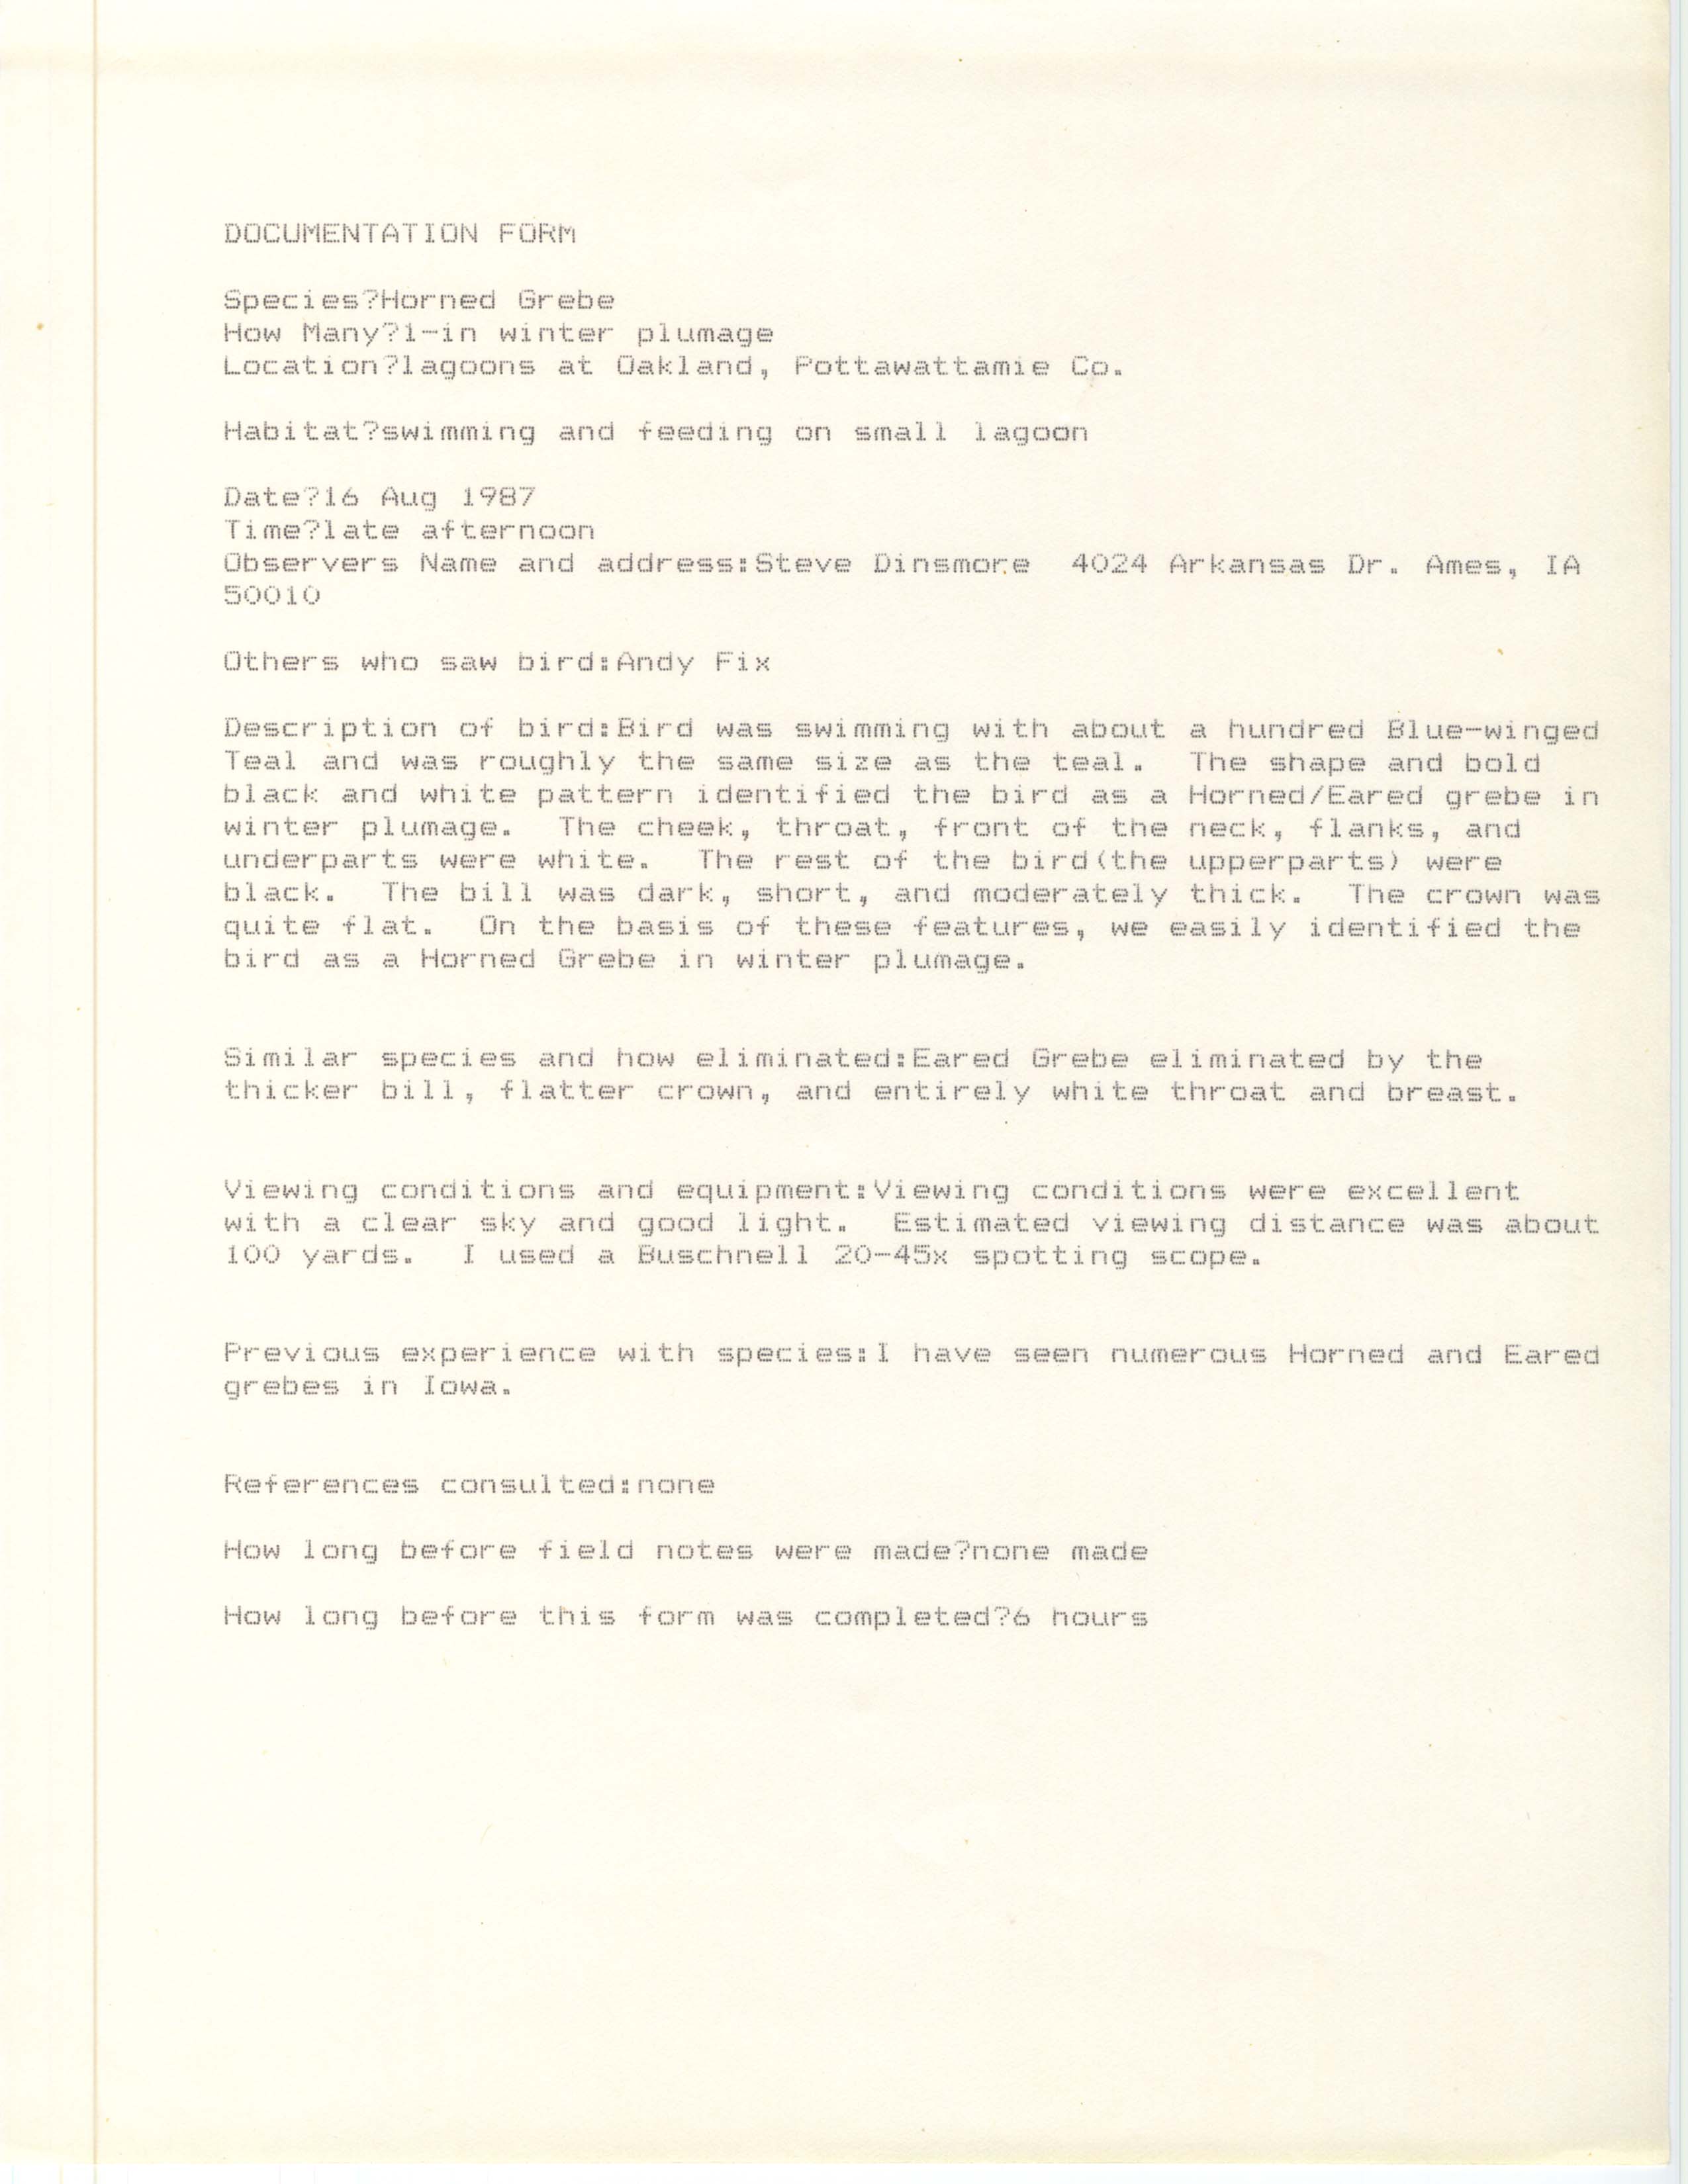  Rare bird documentation form for Horned Grebe at Oakland, 1987